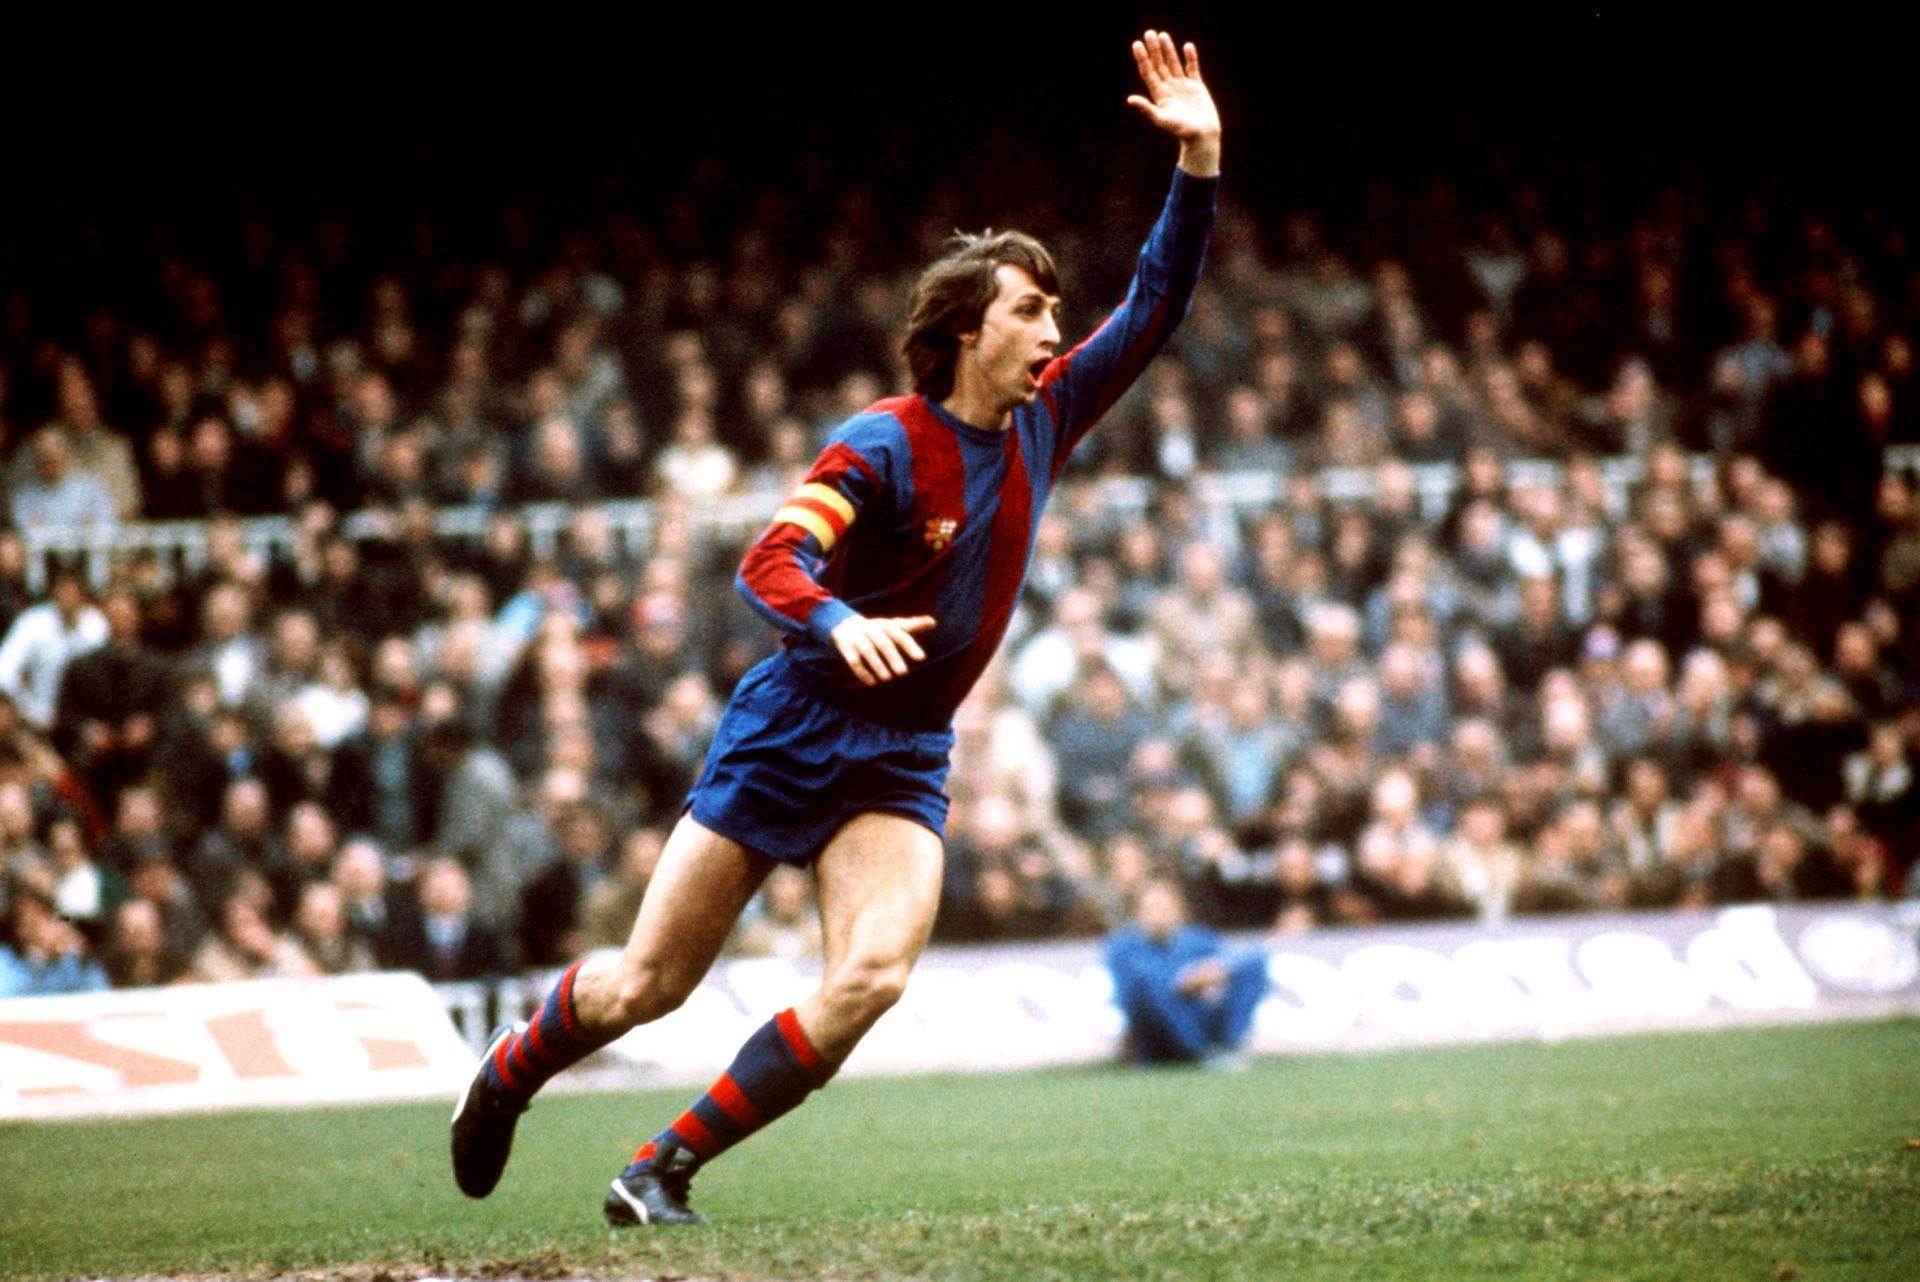 Johan Cruyff was a revolutionary figure in football history